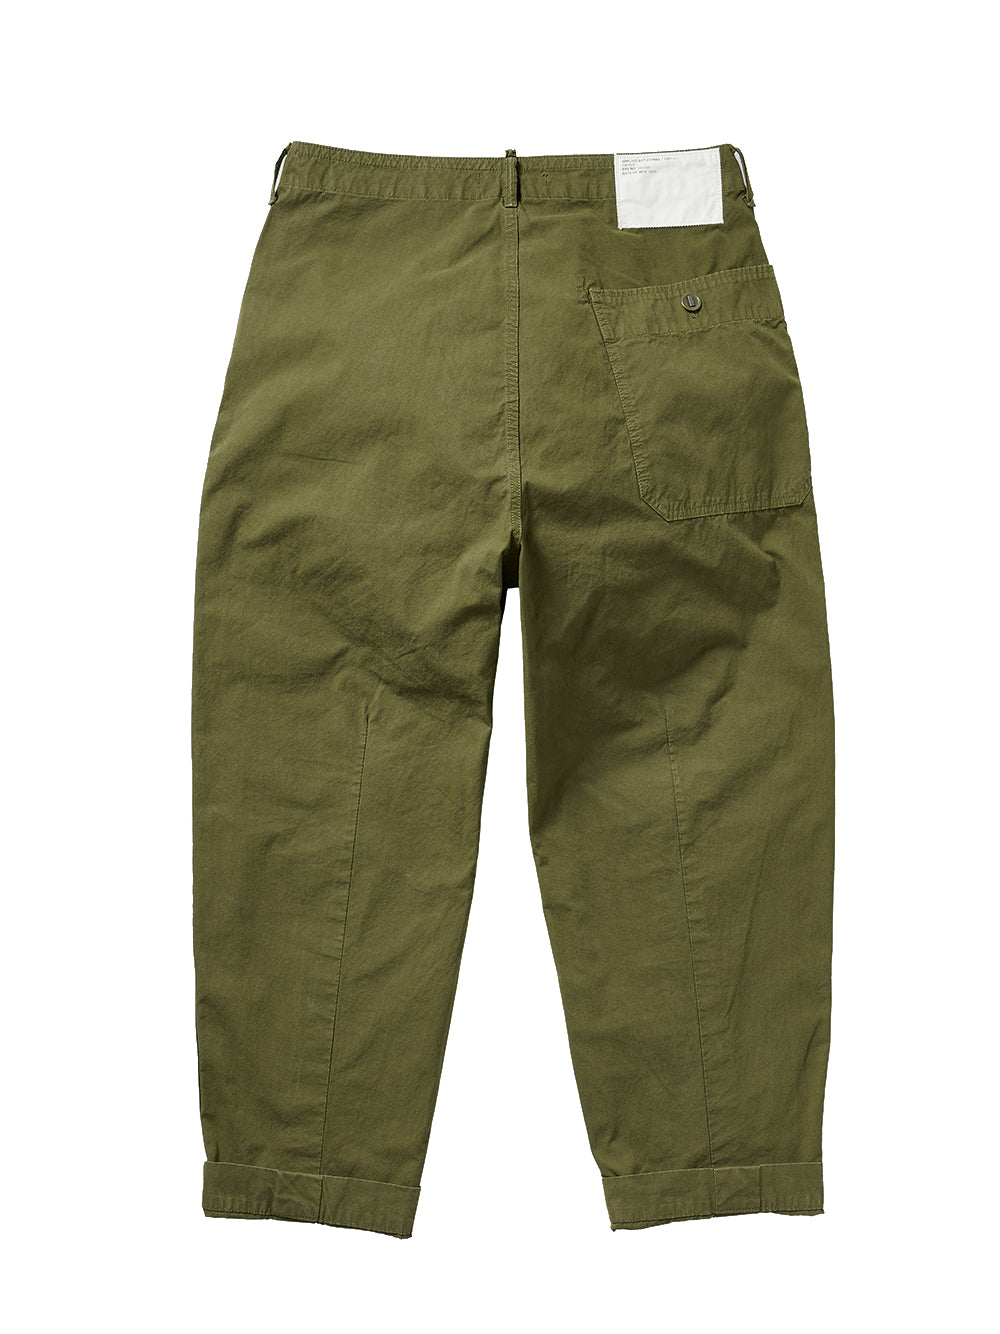 Japanese Cargo Pants (Military Green)